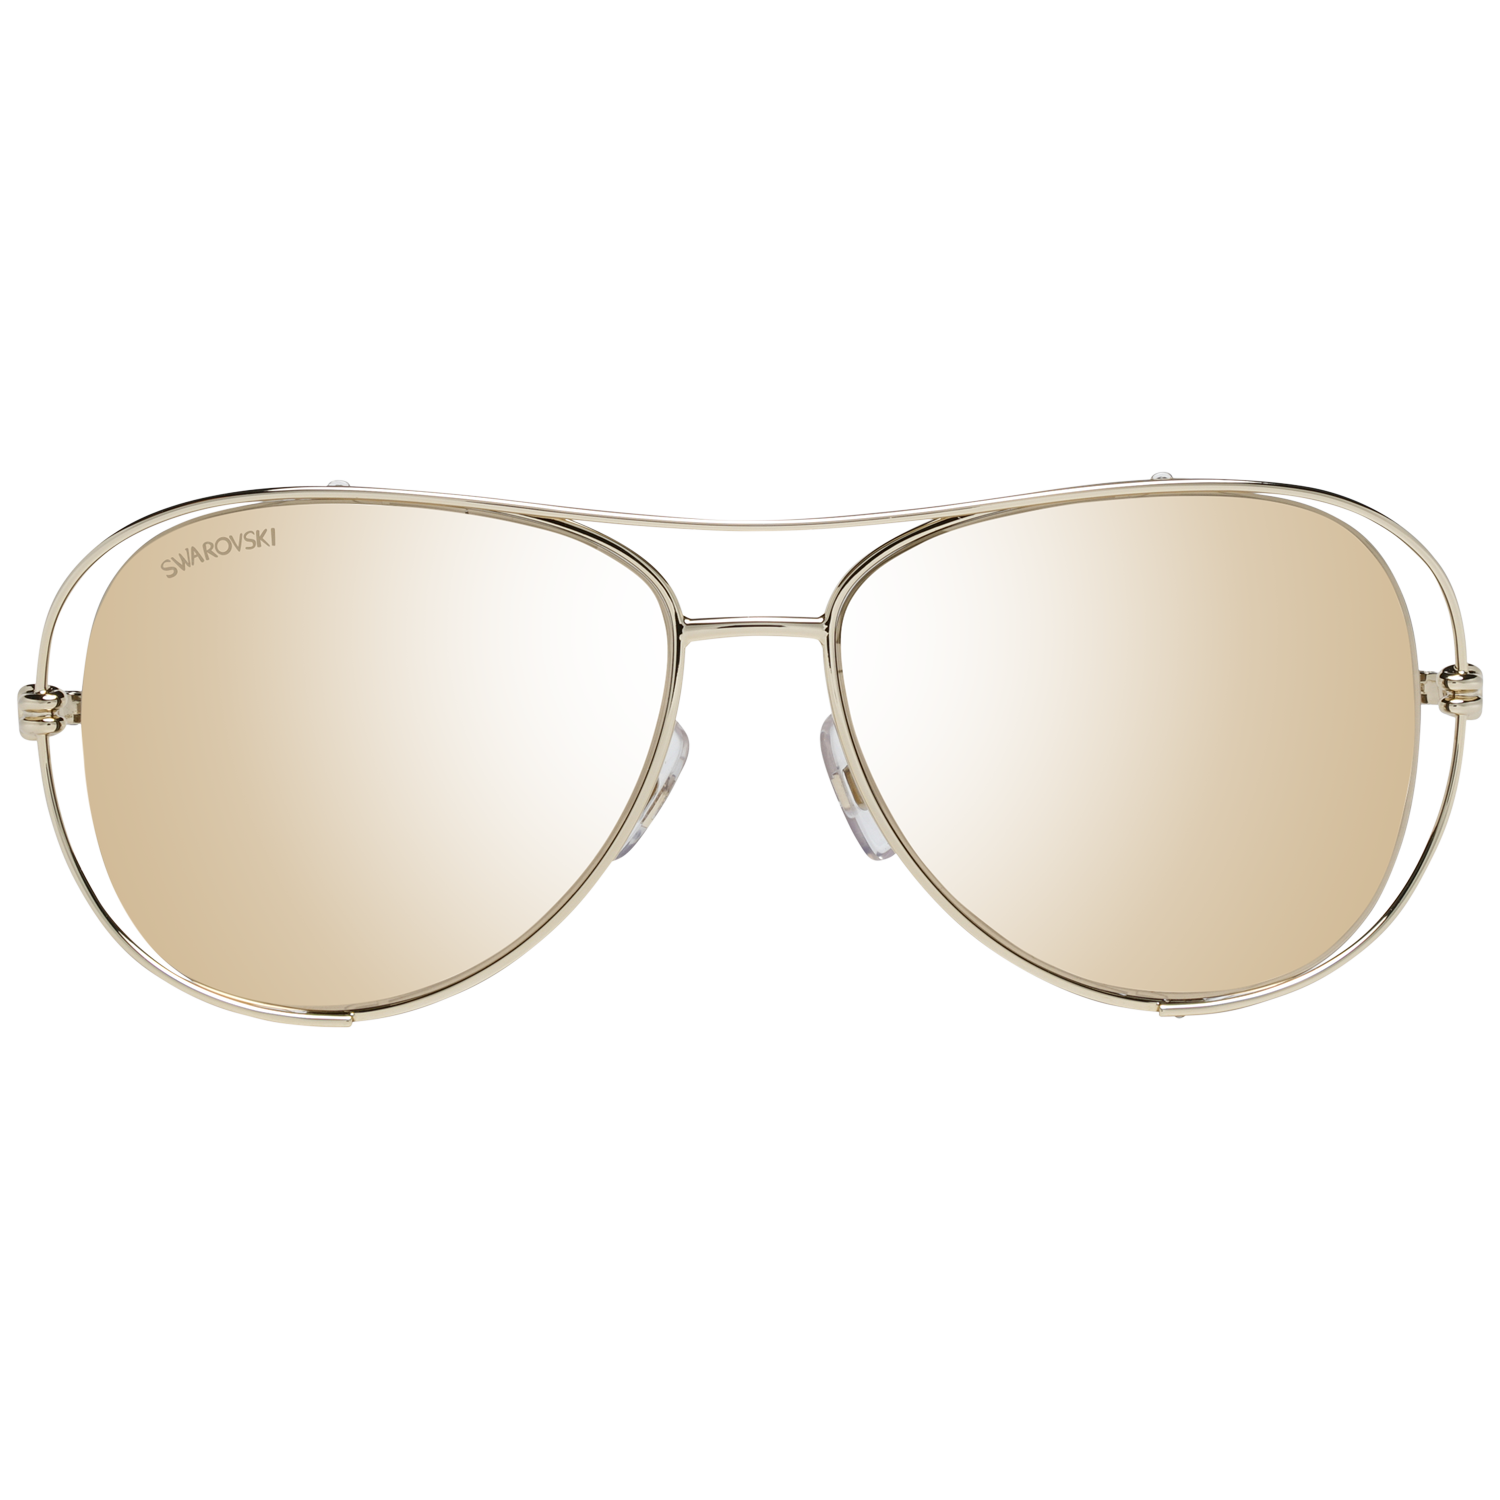 Swarovski Sunglasses Swarovski Sunglasses SK0231 32G 55 Eyeglasses Eyewear UK USA Australia 